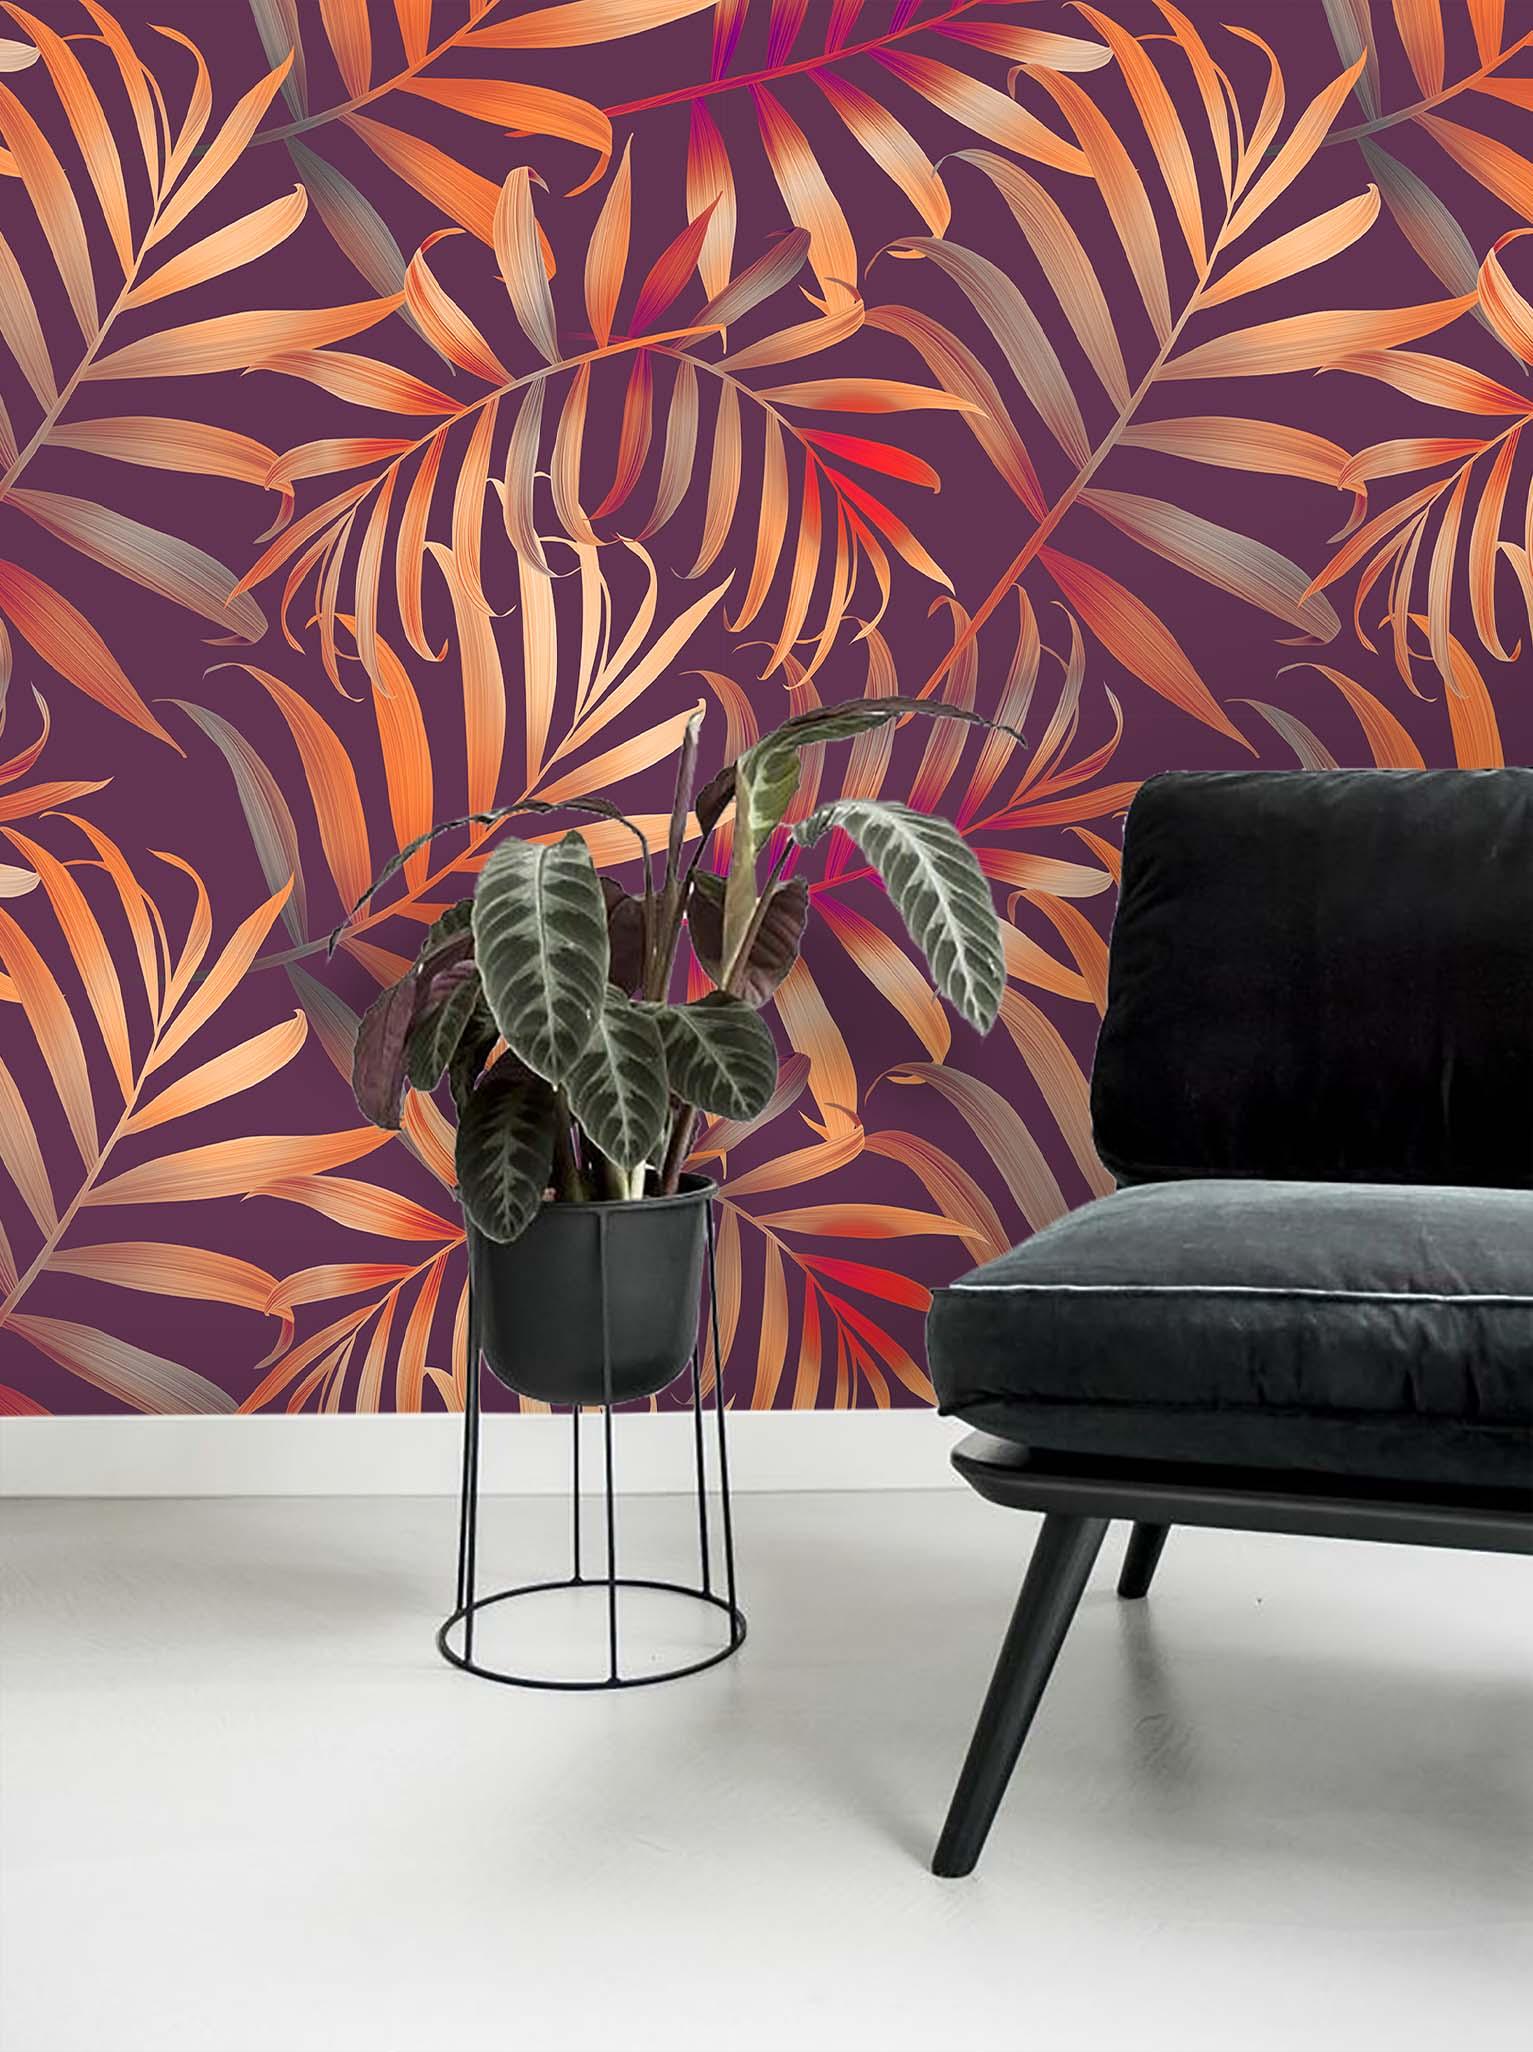 3D Orange Leaves Wall Mural Wallpaper 69- Jess Art Decoration